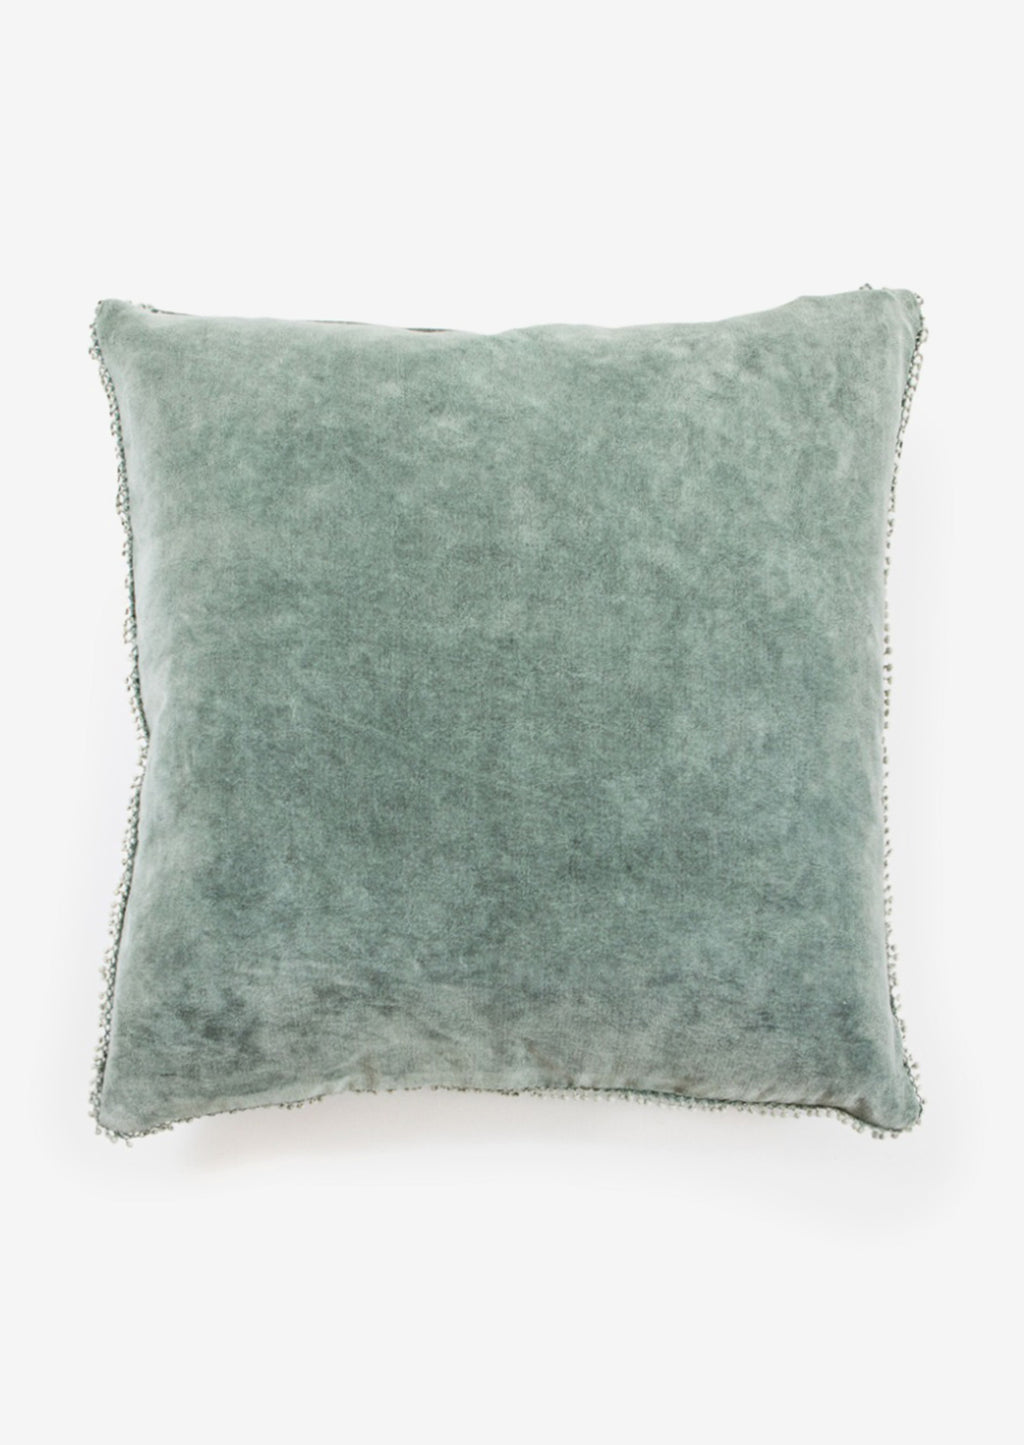 Juniper: A velvet throw pillow with pom pom trim in juniper color.